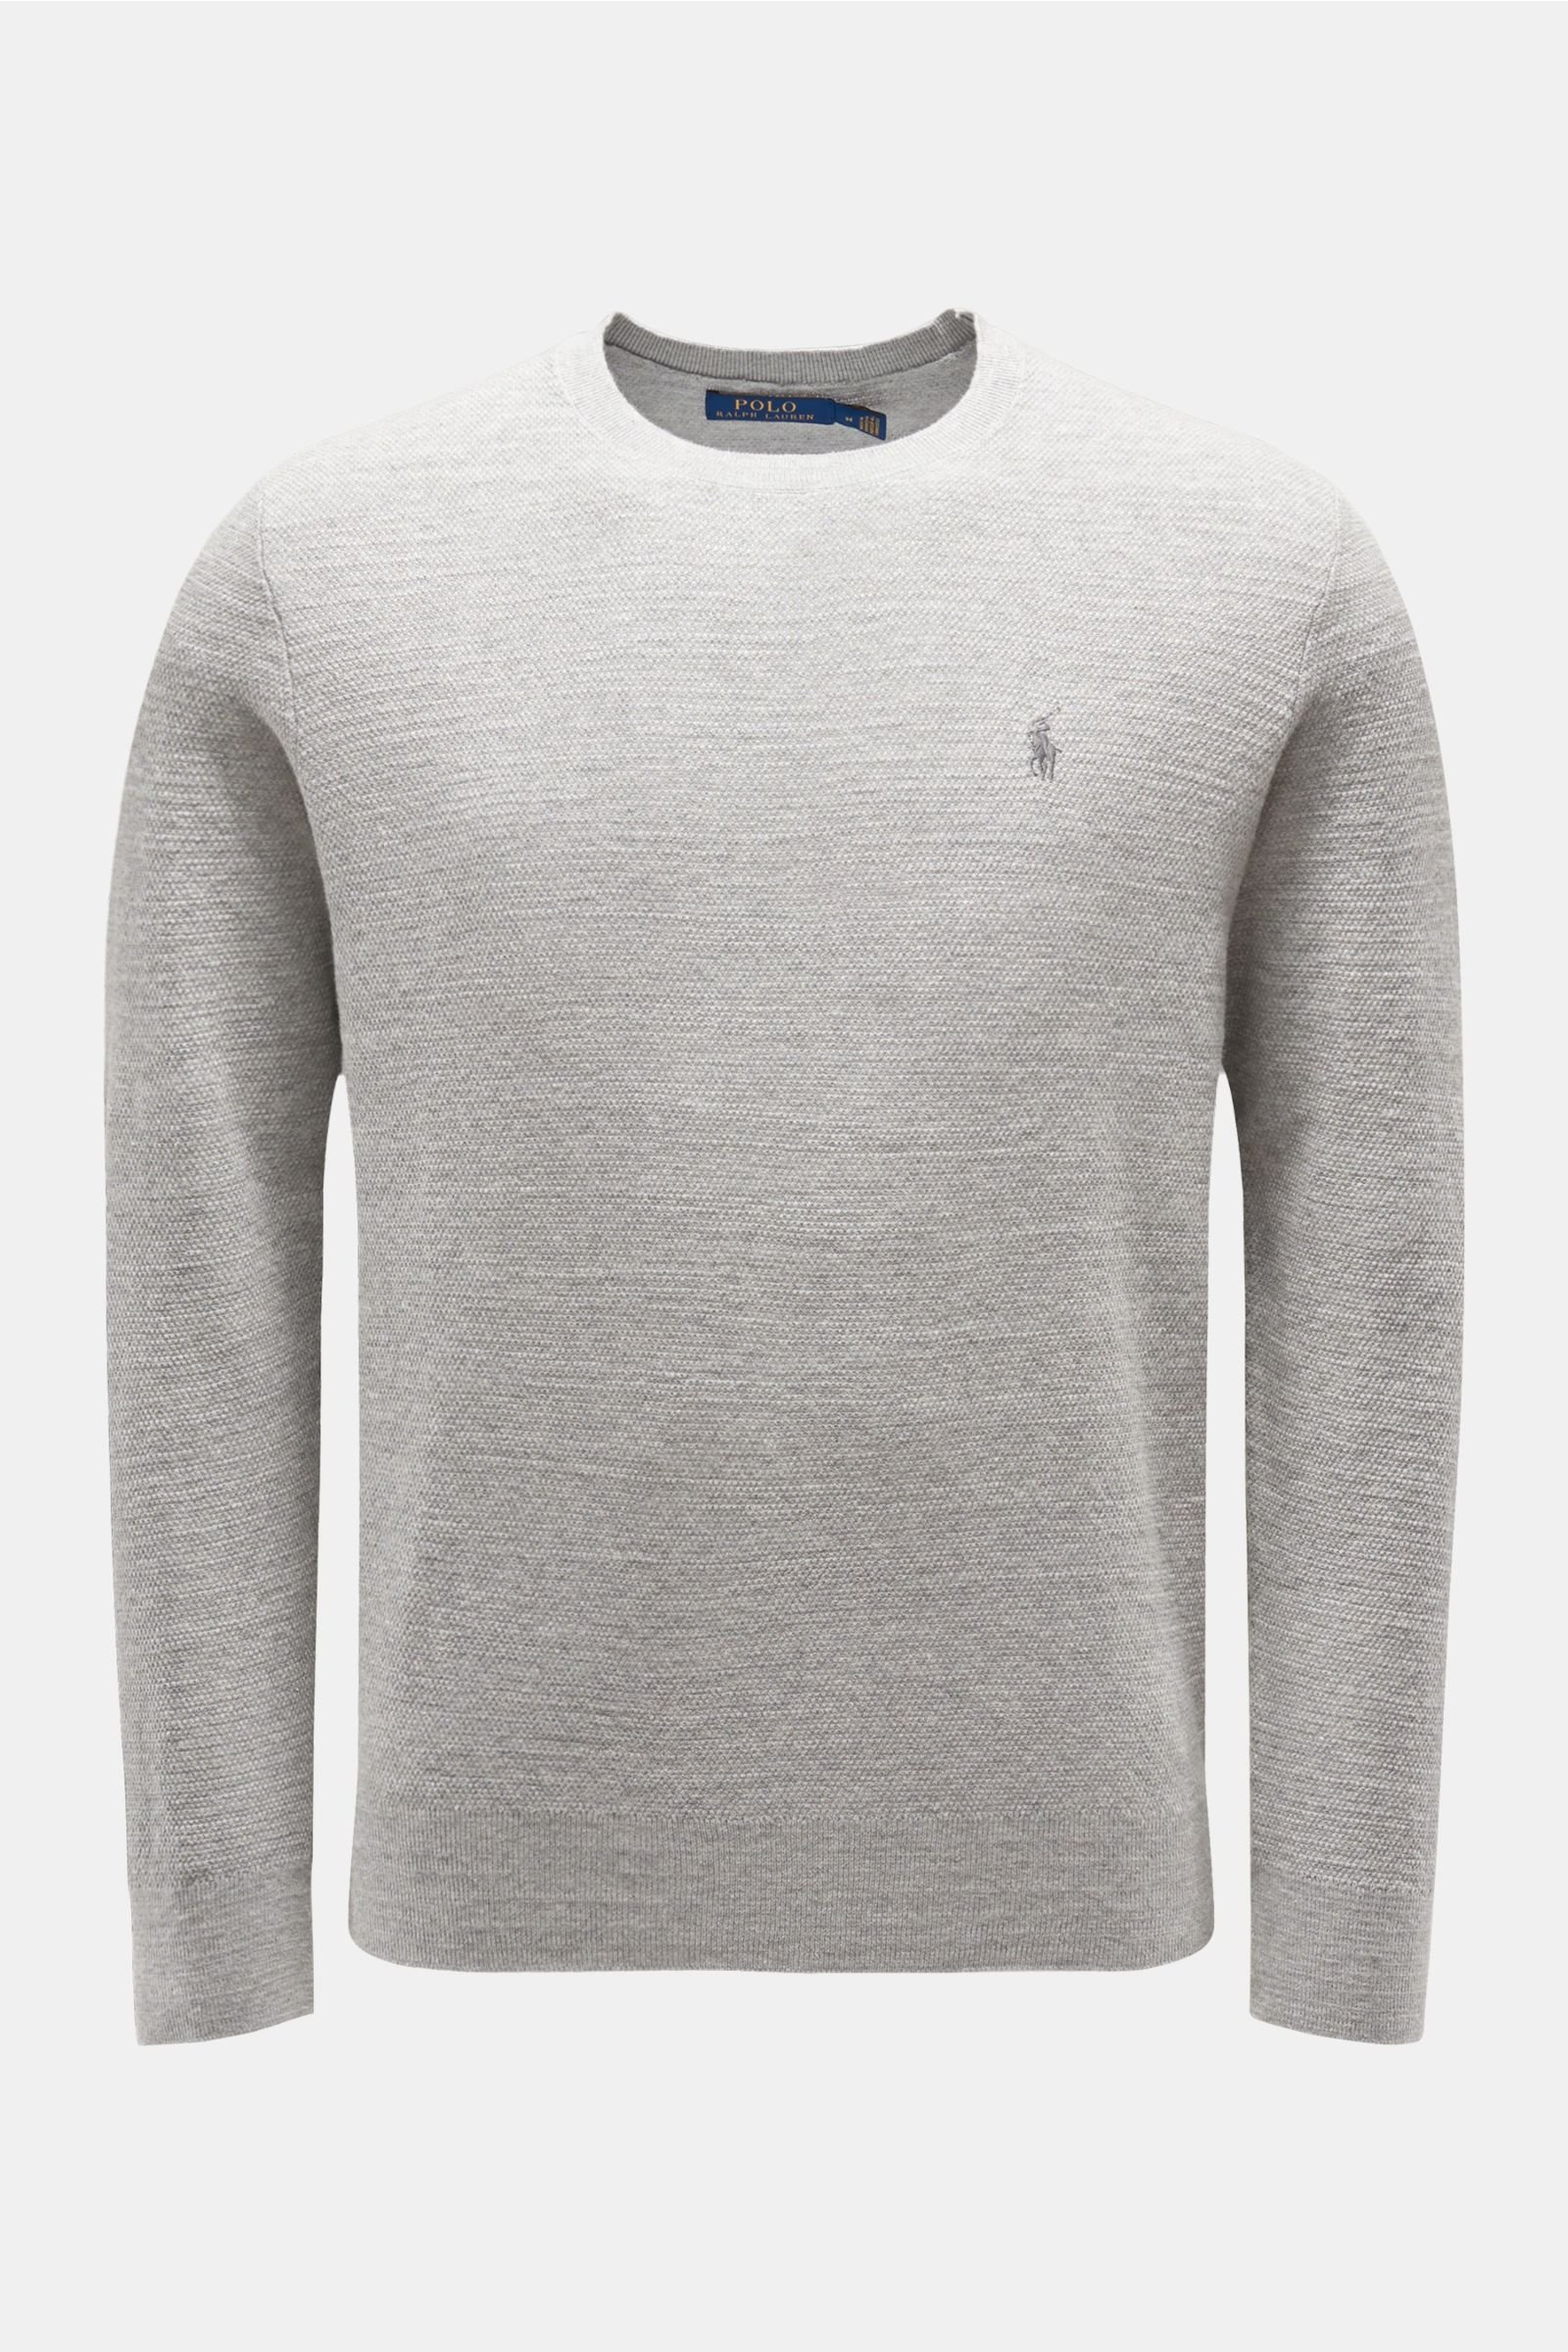 grey ralph jumper